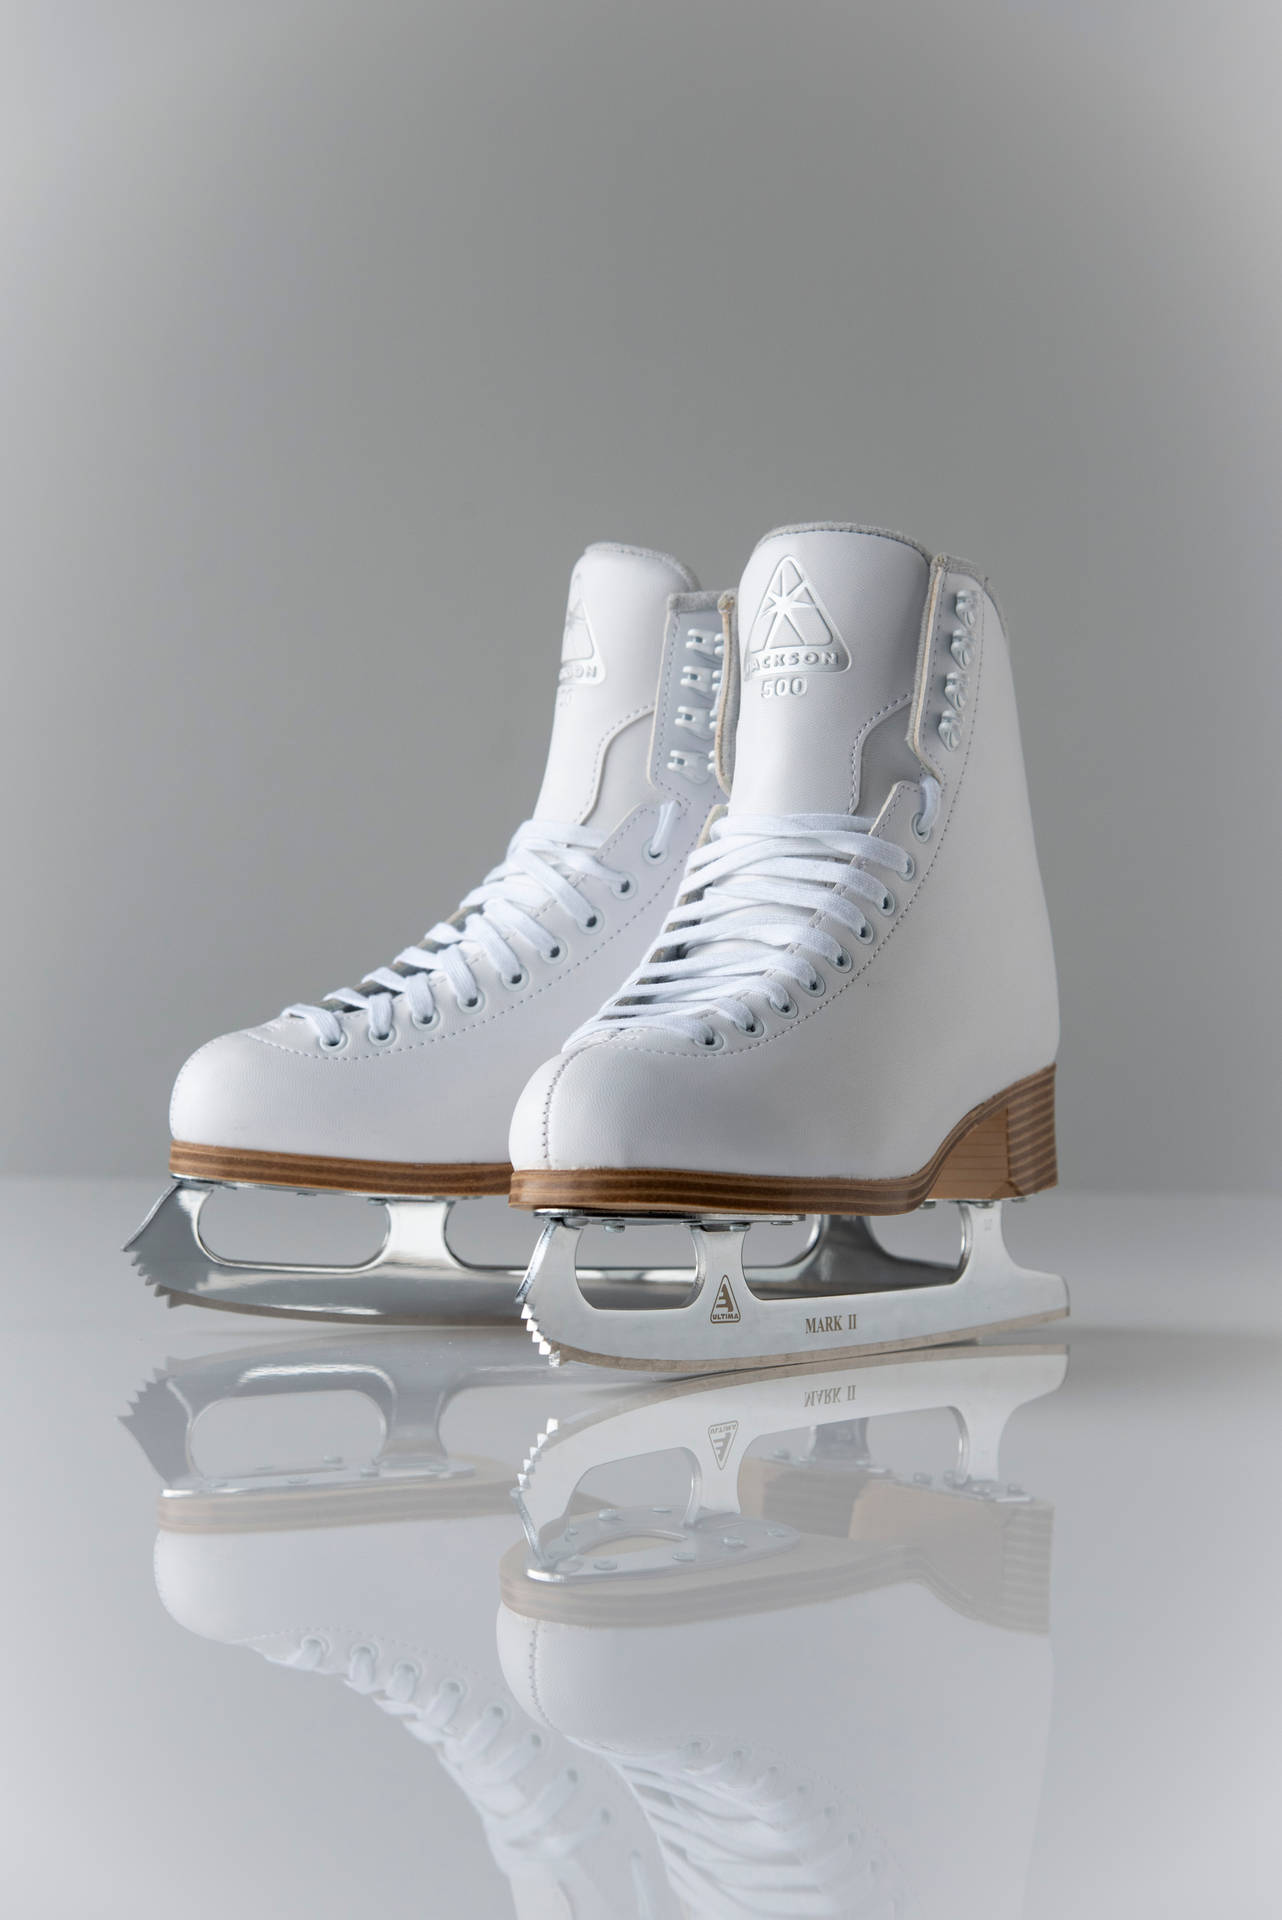 Minimalist Ice Skating Boots Wallpaper